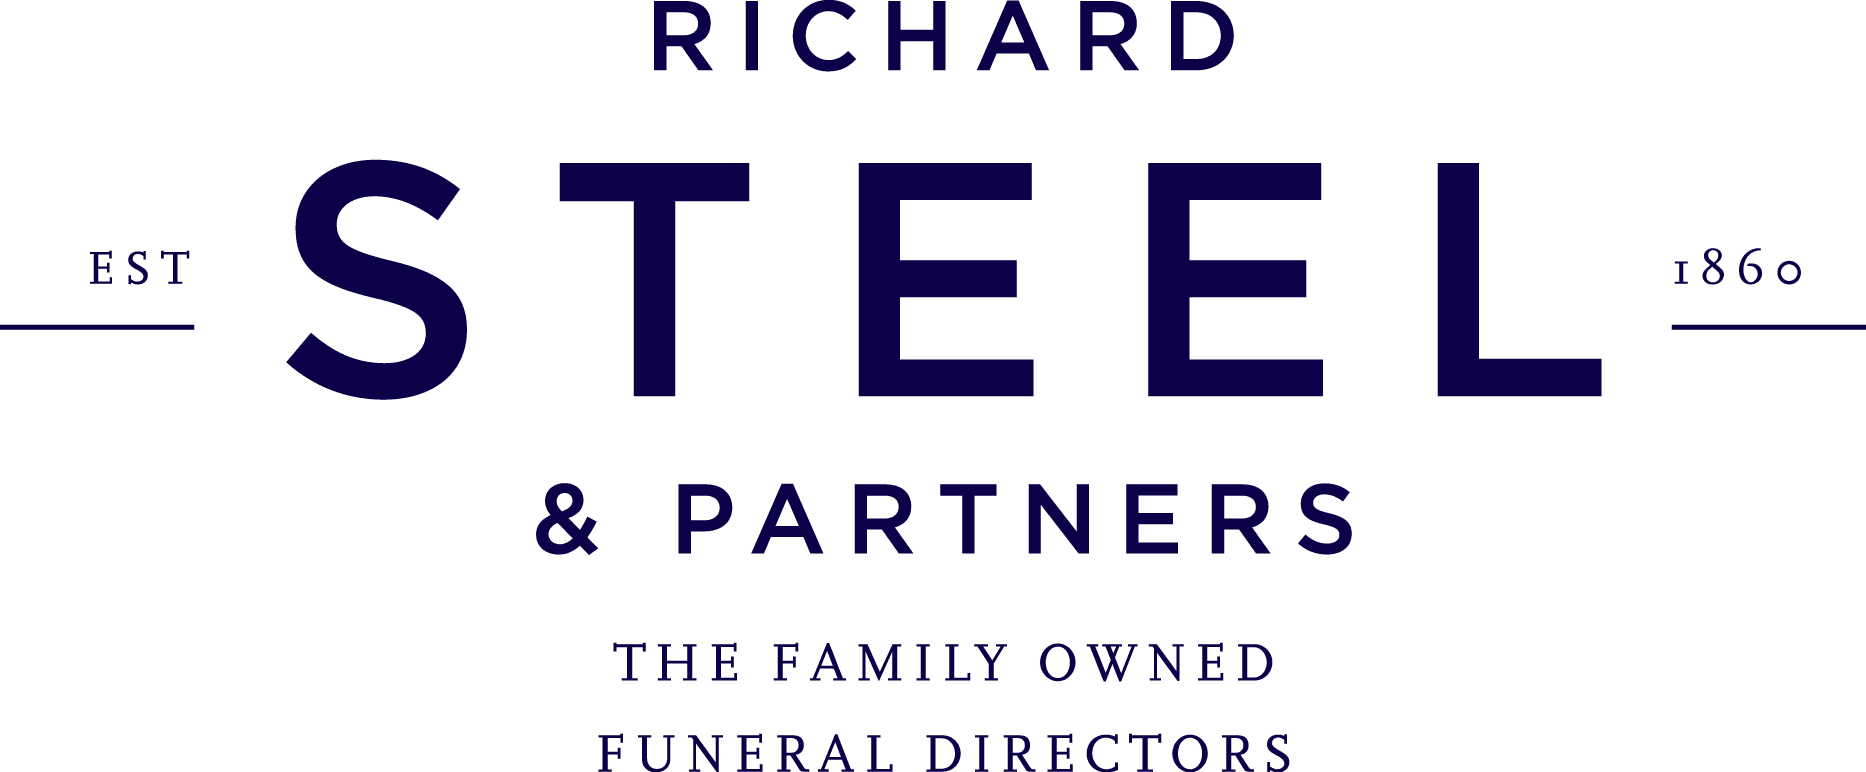 Richard Steel and Partners